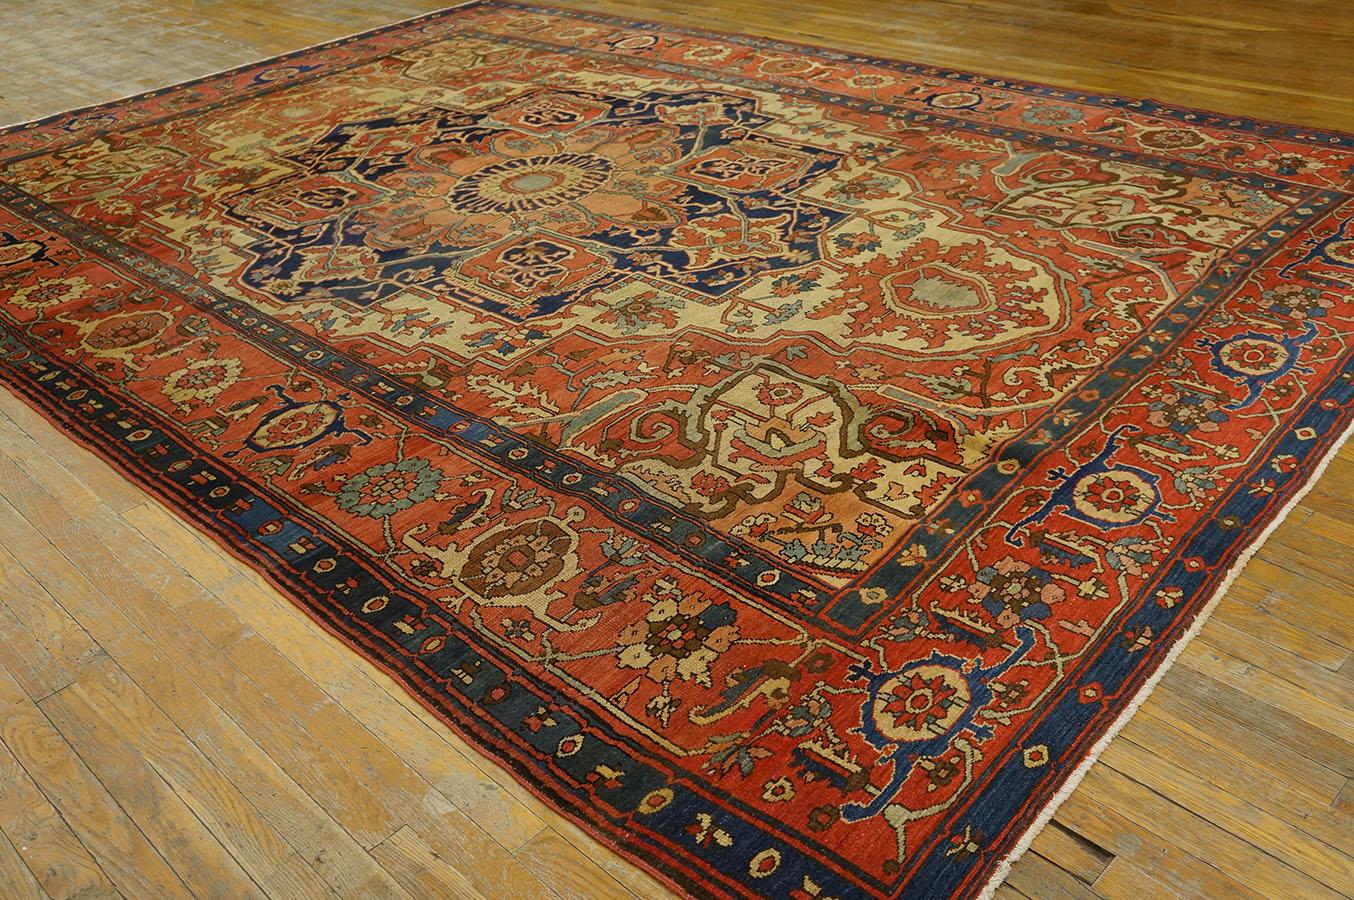 Antique Persian Serapi Carpet
9'7